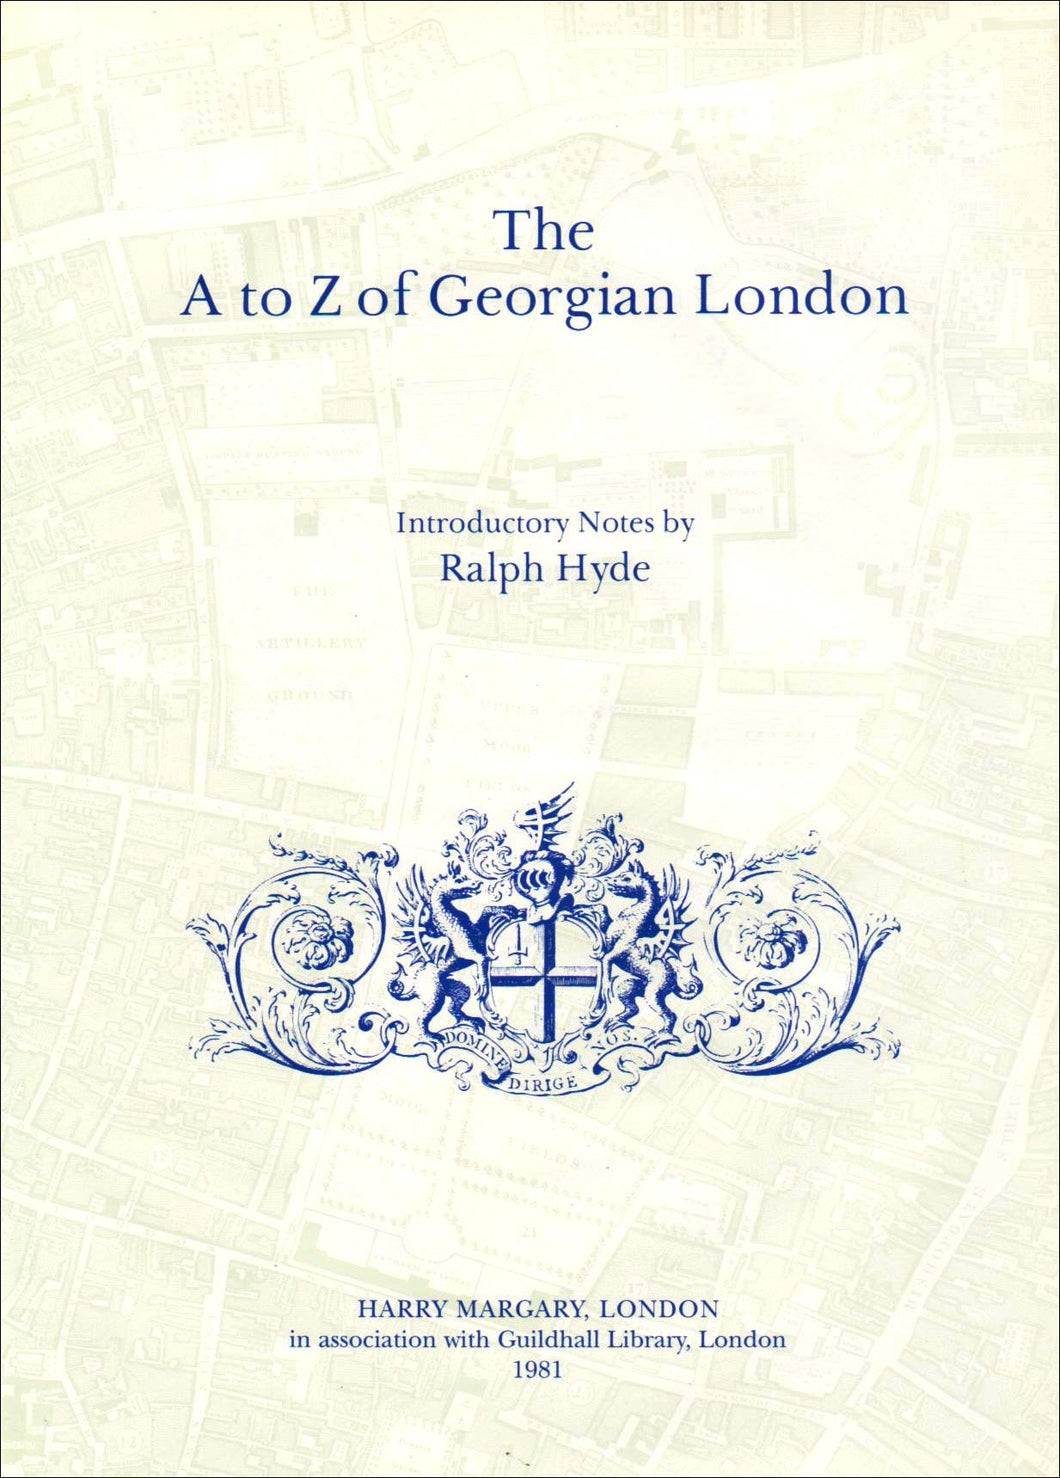 A-Z of Georgian London